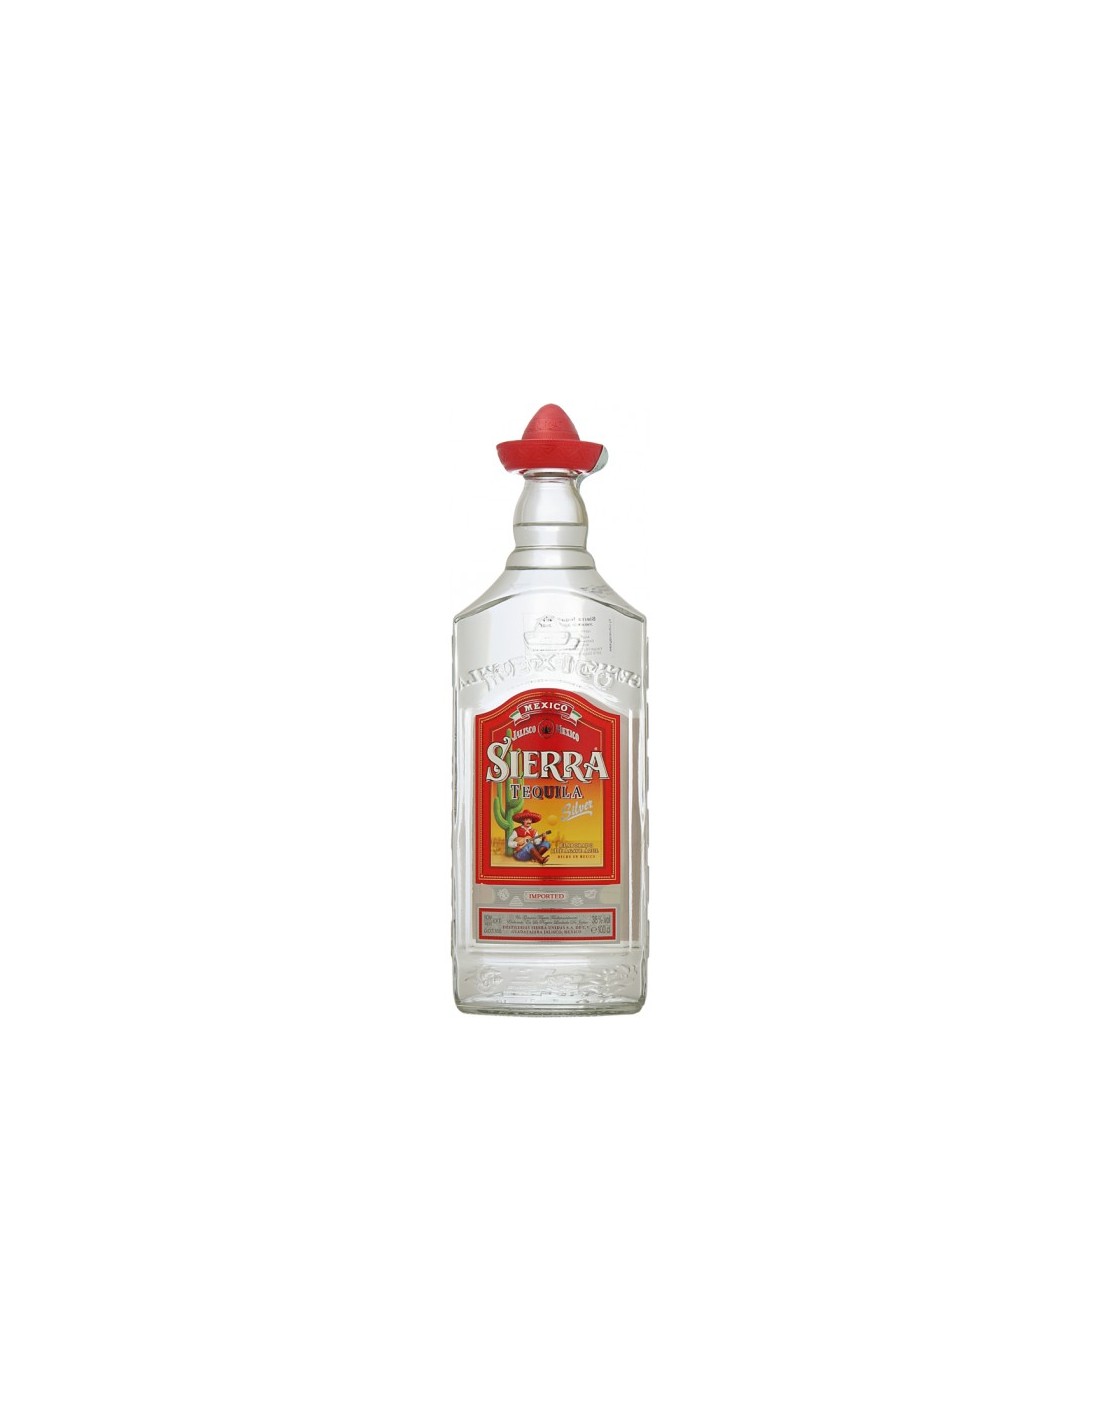 Tequila alba Sierra Silver, 0.7L, 38% alc., Mexic alcooldiscount.ro